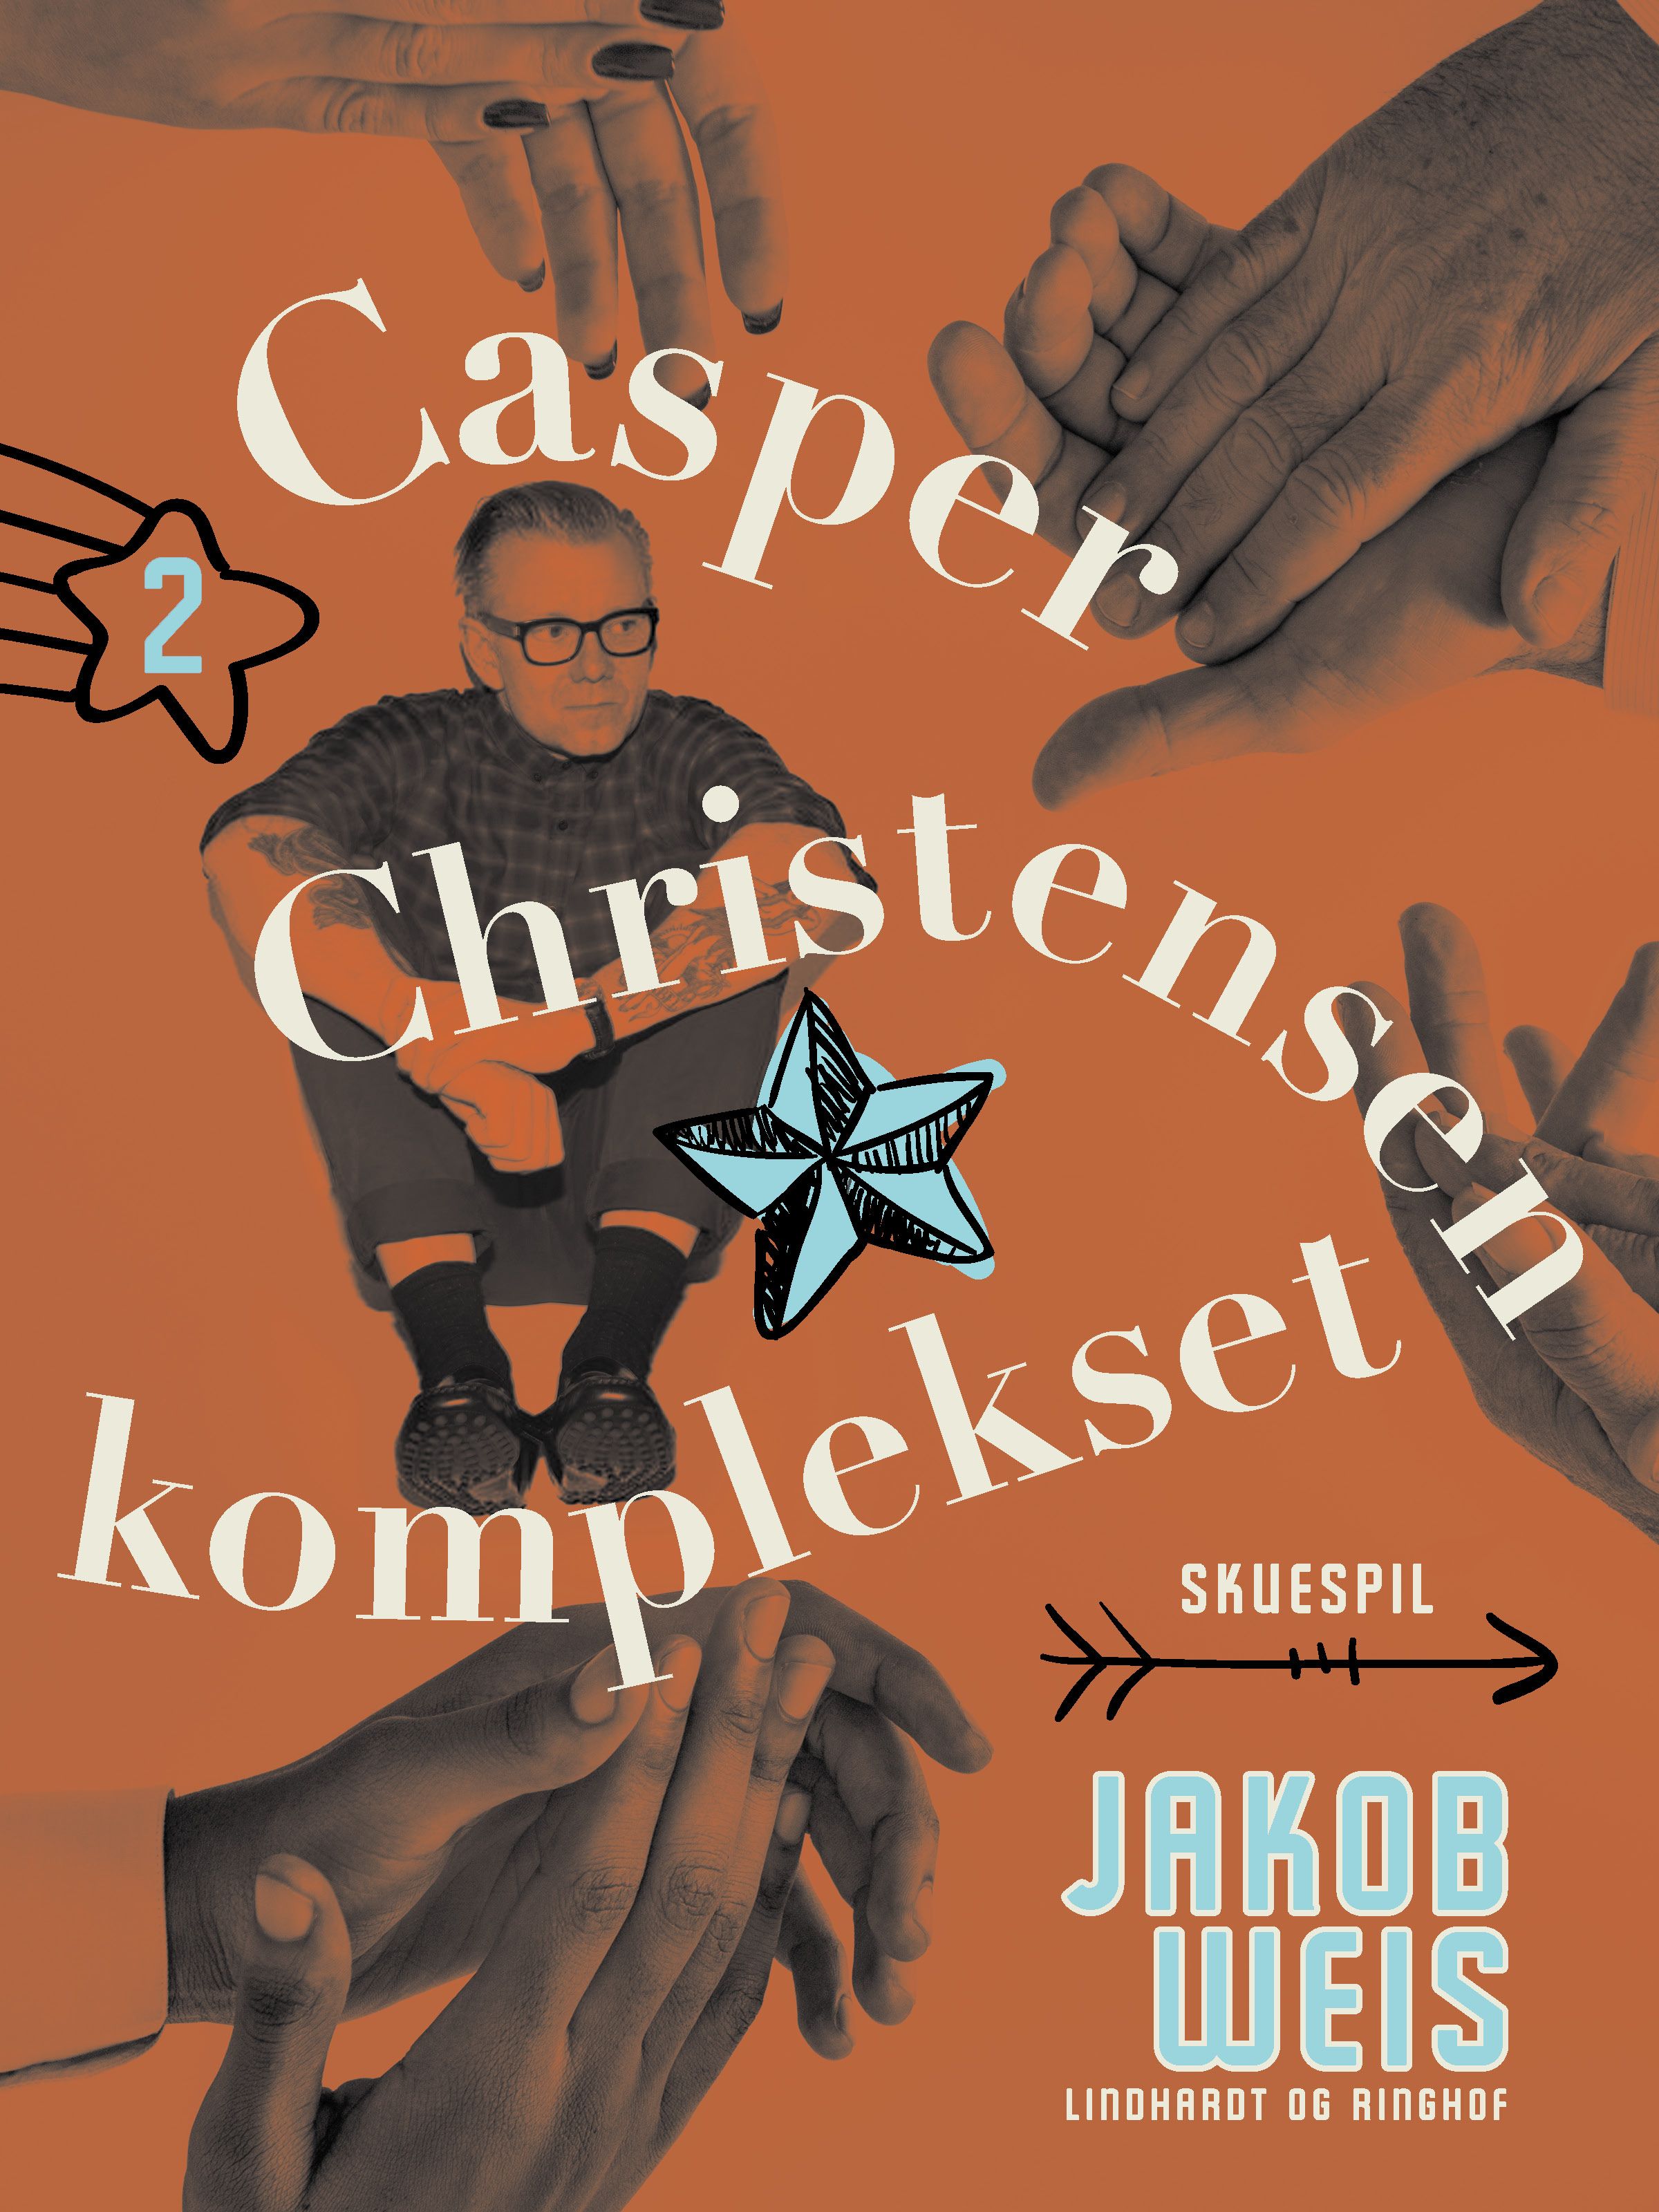 Casper Christensen komplekset, e-bog af Jakob Weis